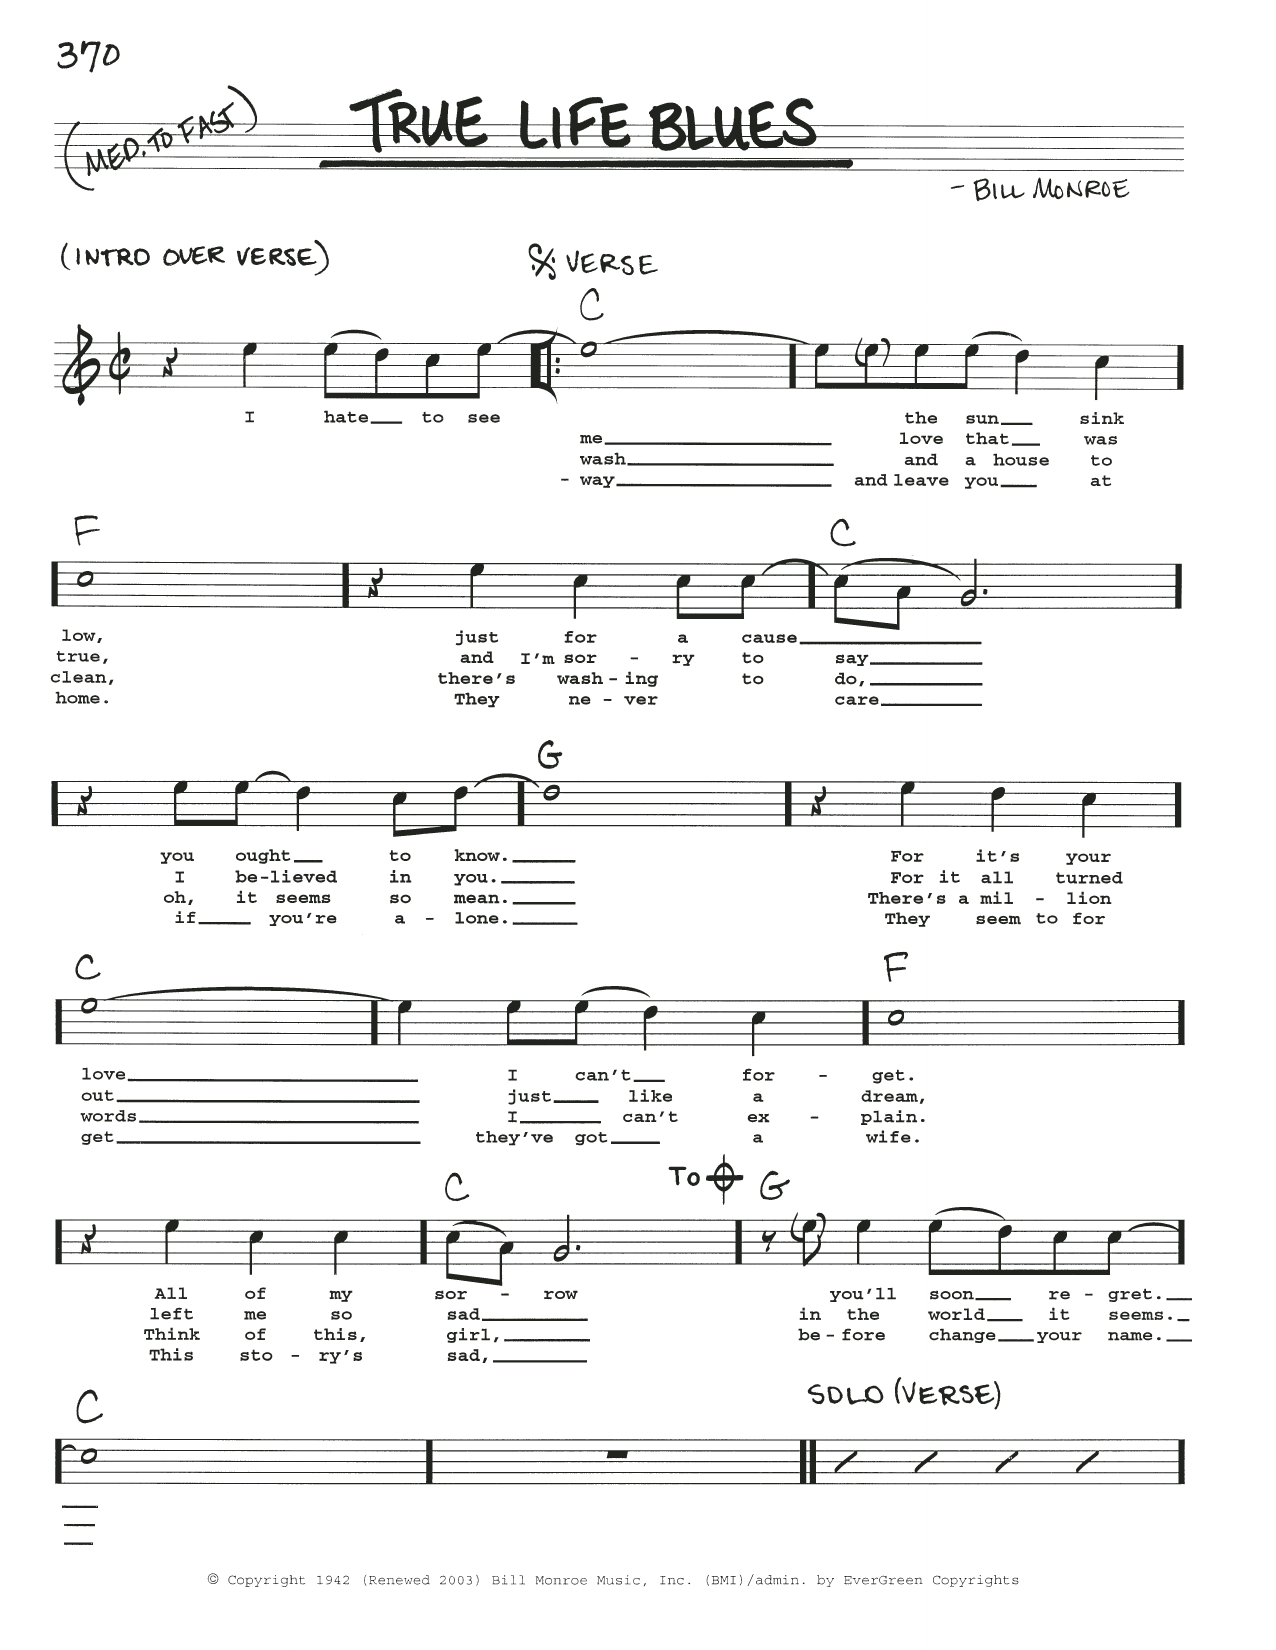 Bill Monroe True Life Blues Sheet Music Notes & Chords for Real Book – Melody, Lyrics & Chords - Download or Print PDF